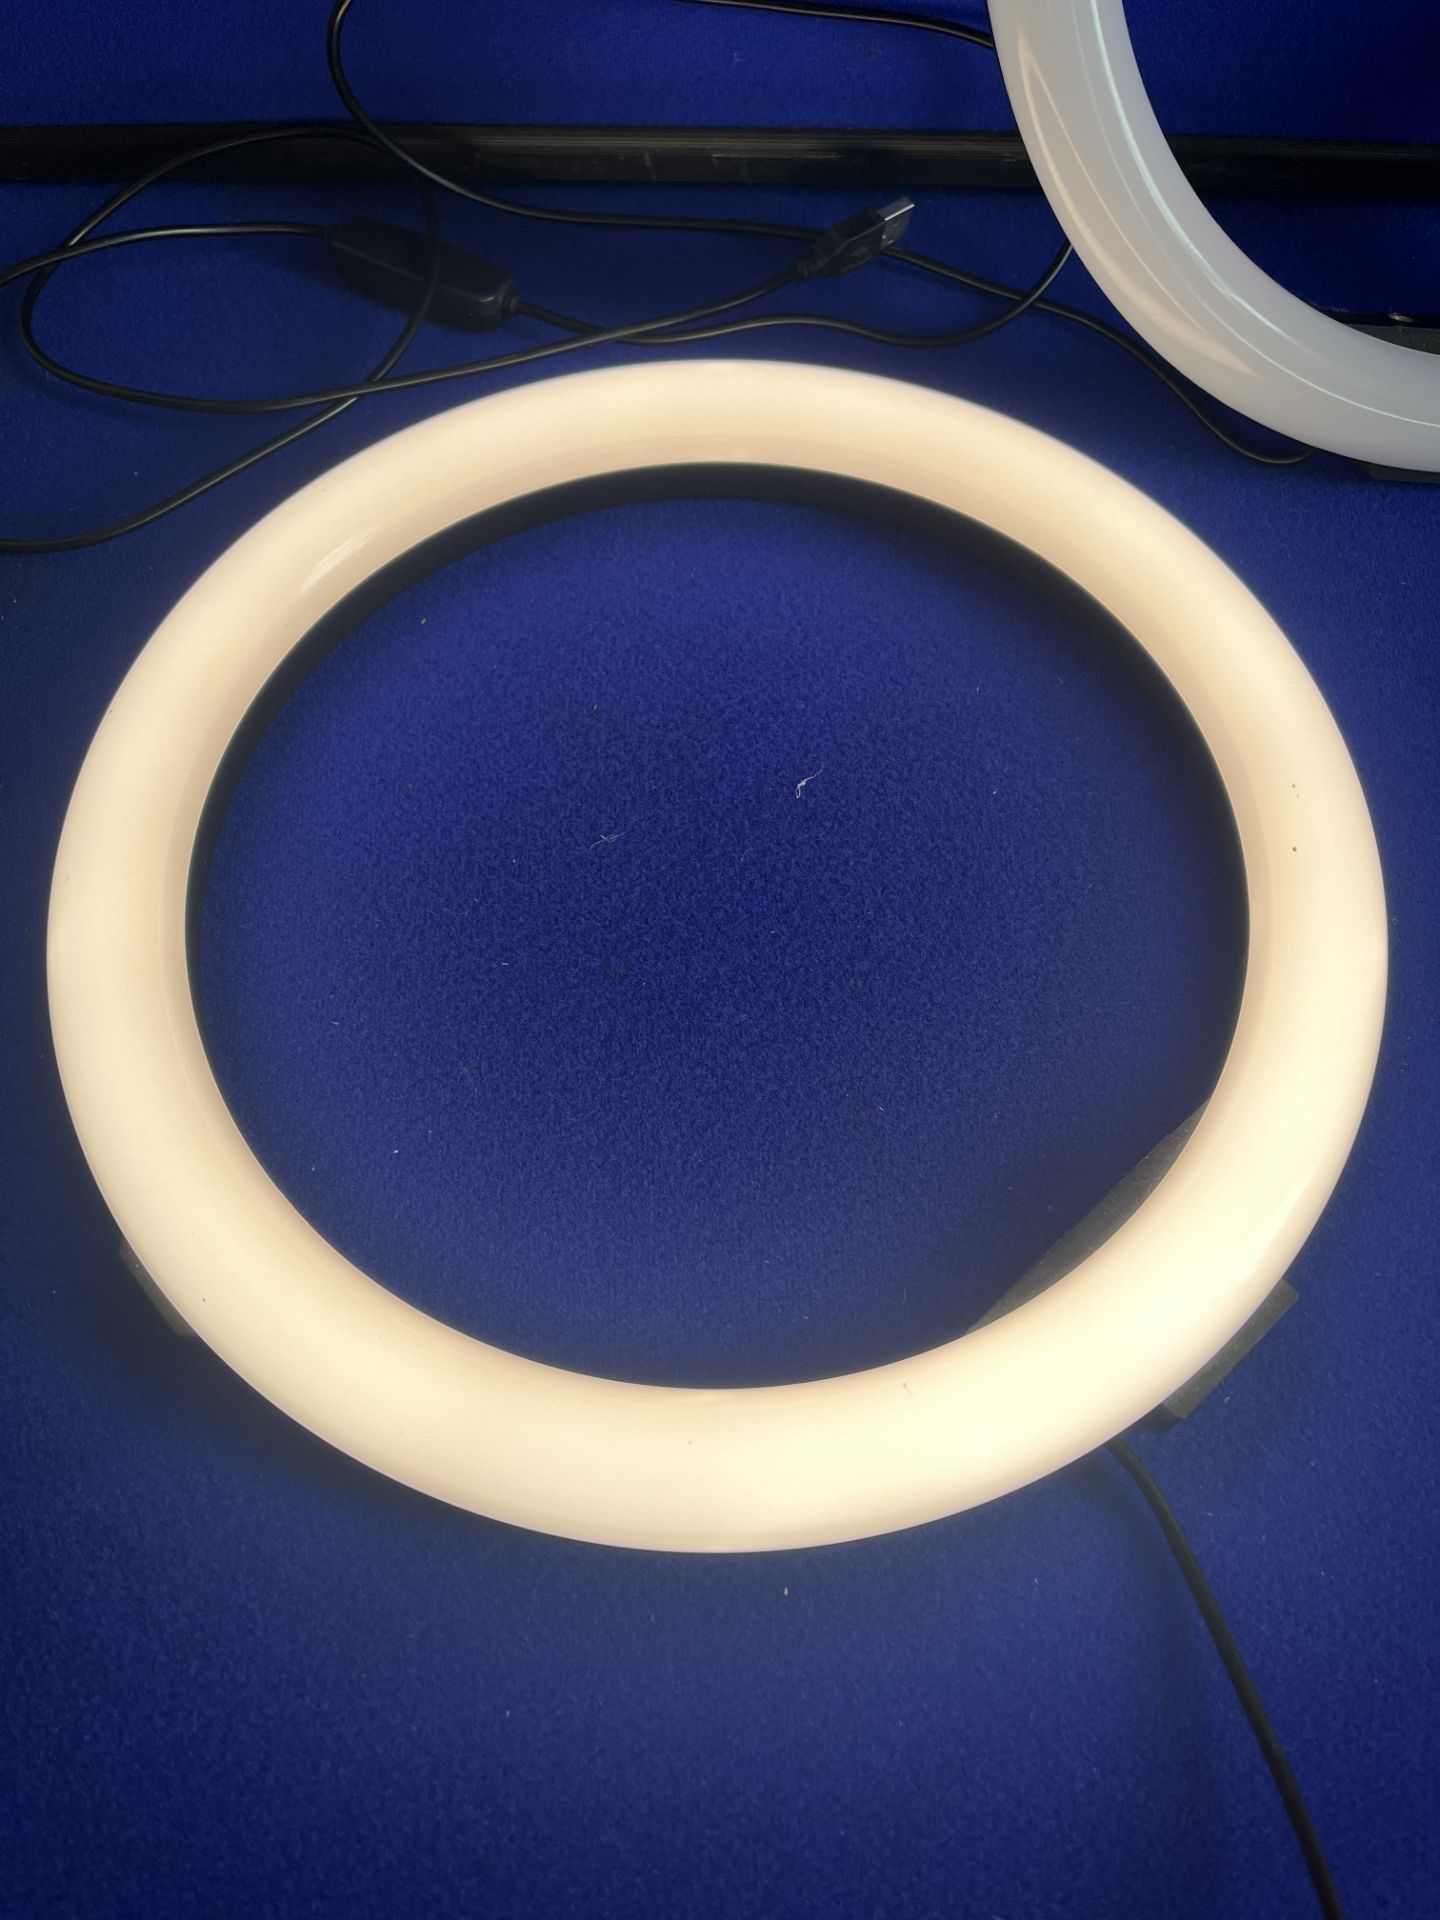 3 x USB LED Ring Lights - Image 4 of 4